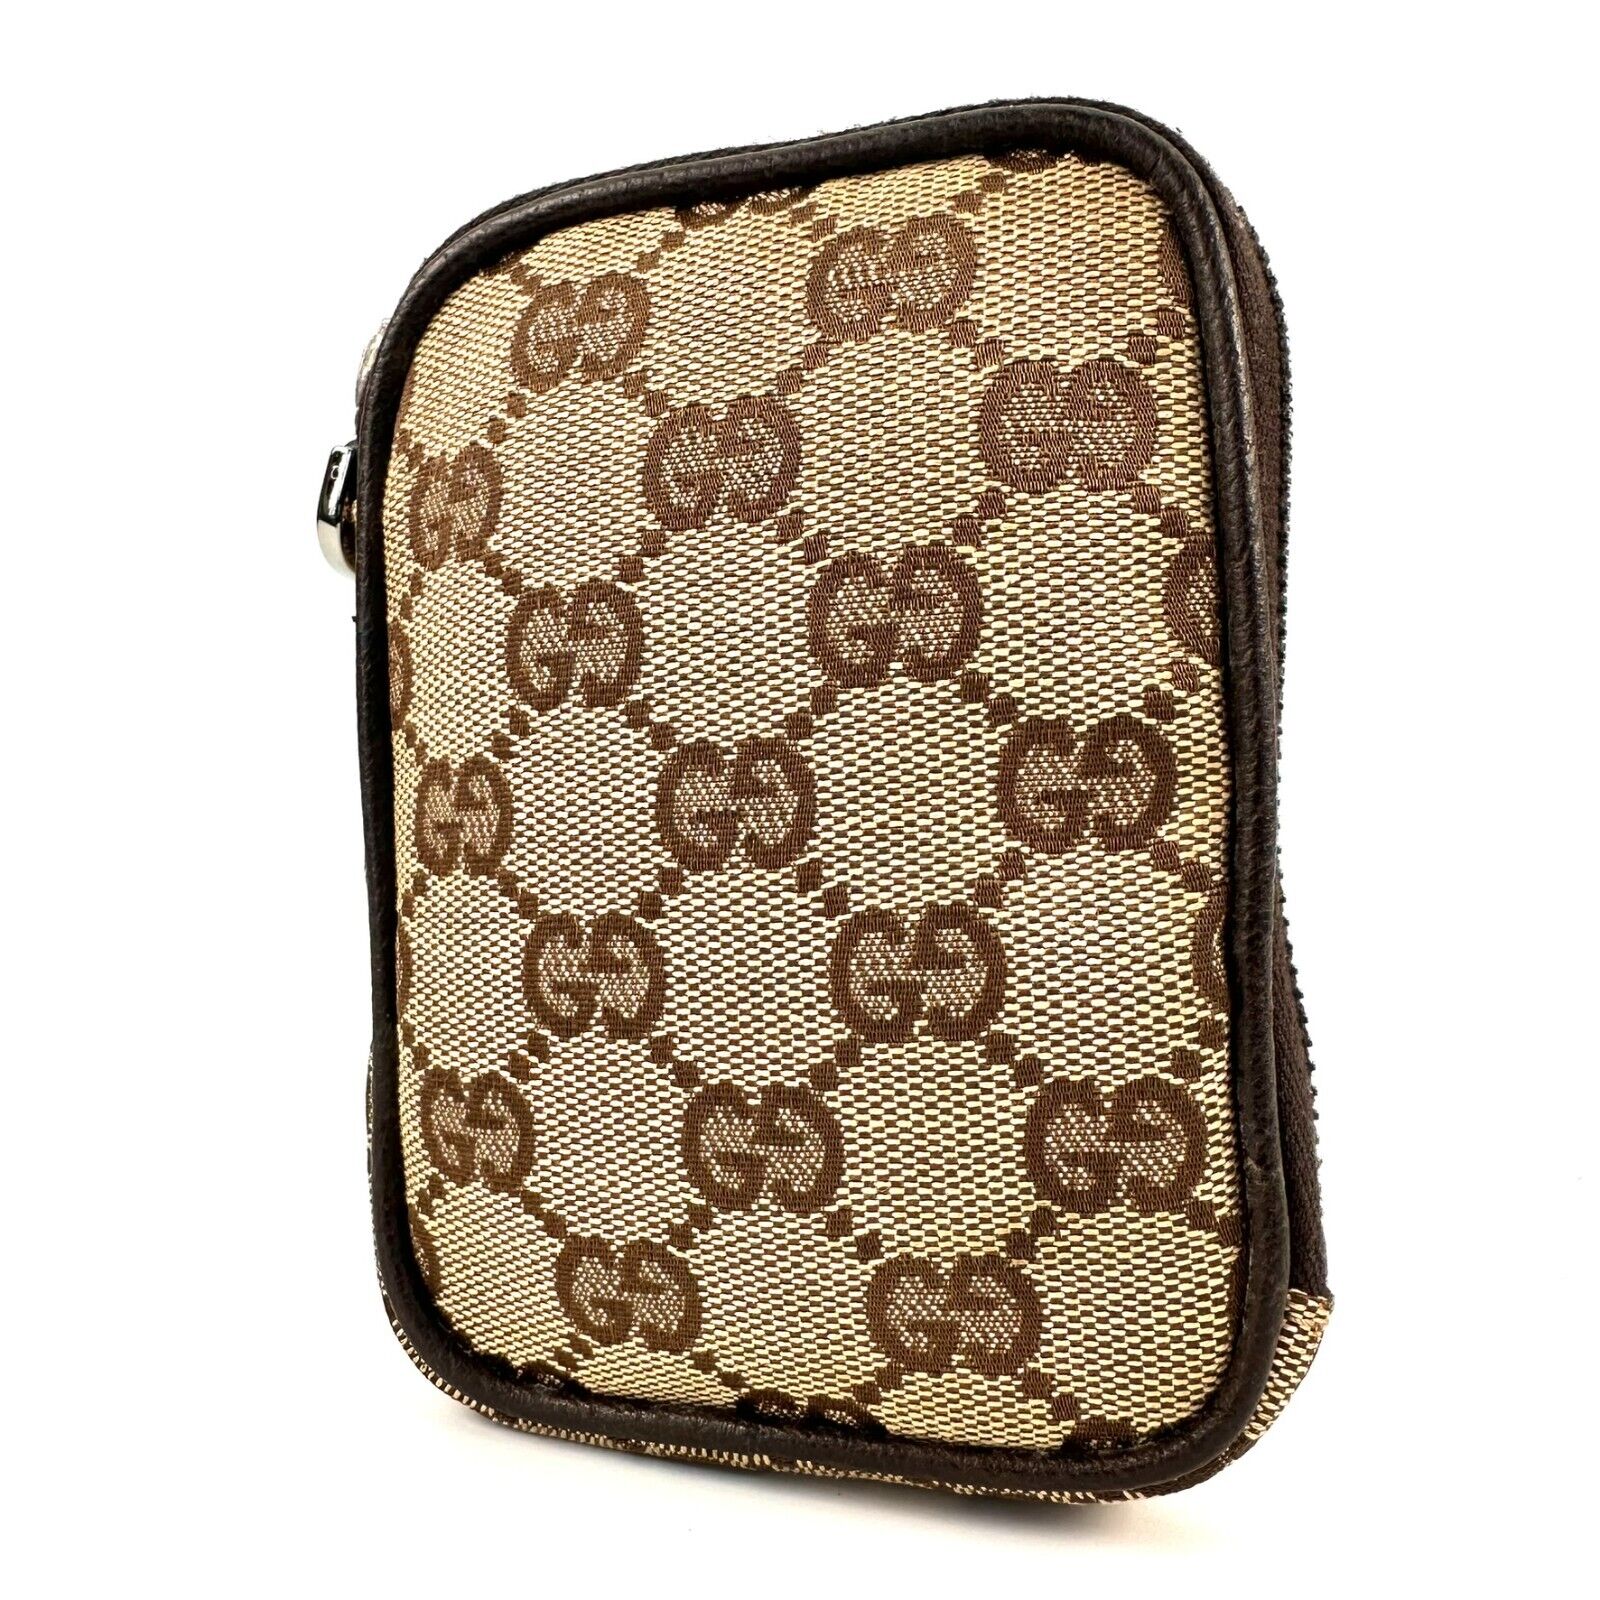 Authentic GUCCI Cigarette Case Pouch Purse GG Canvas Leather 162359 X03-0256